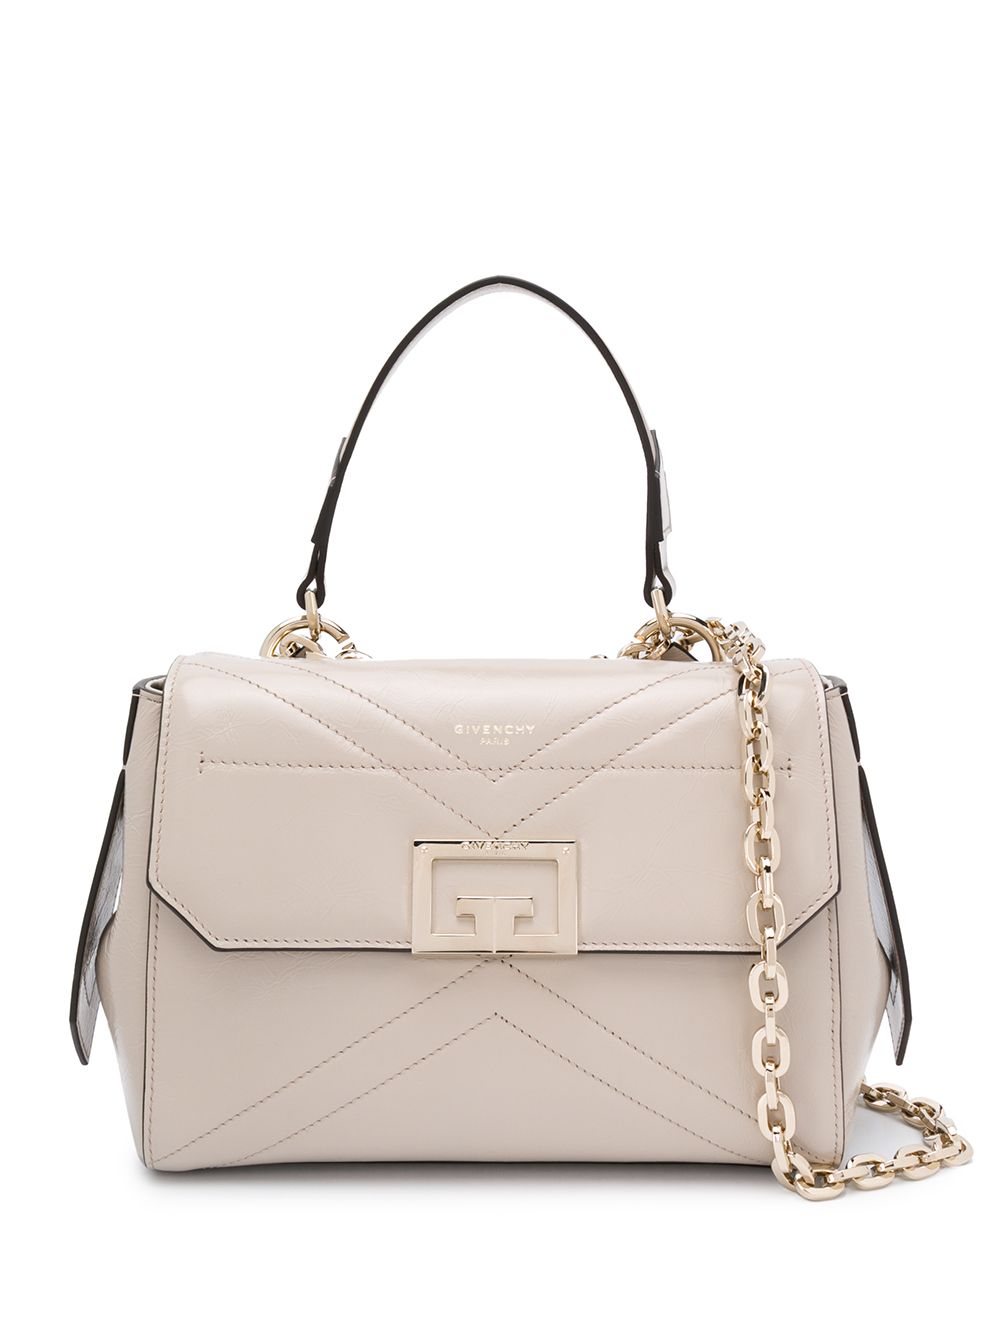 фото Givenchy сумка среднего размера